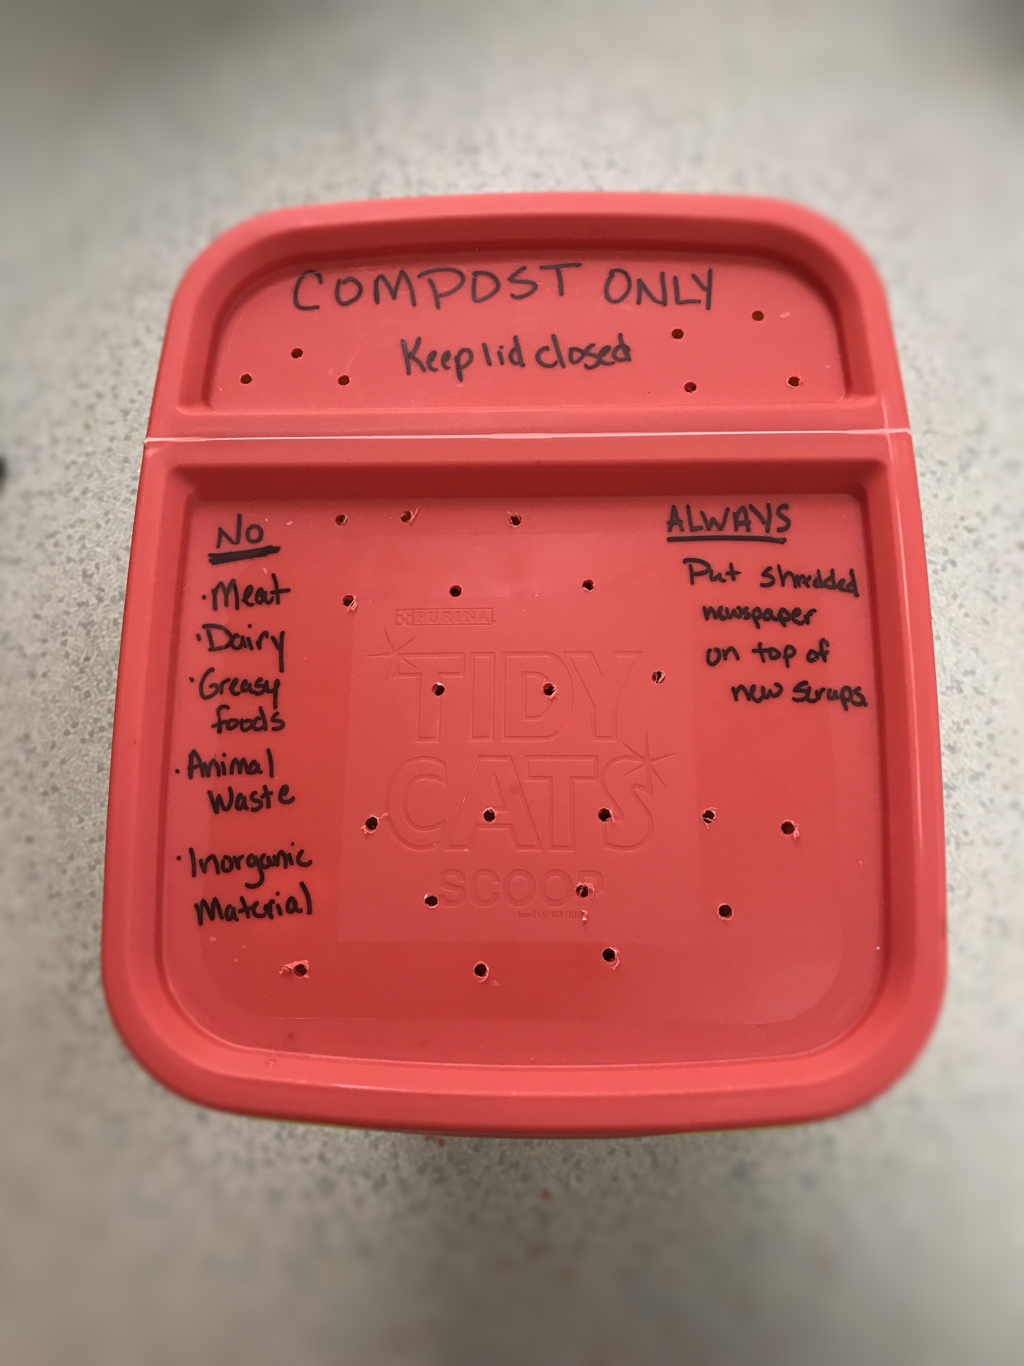 compost only reminder on lid